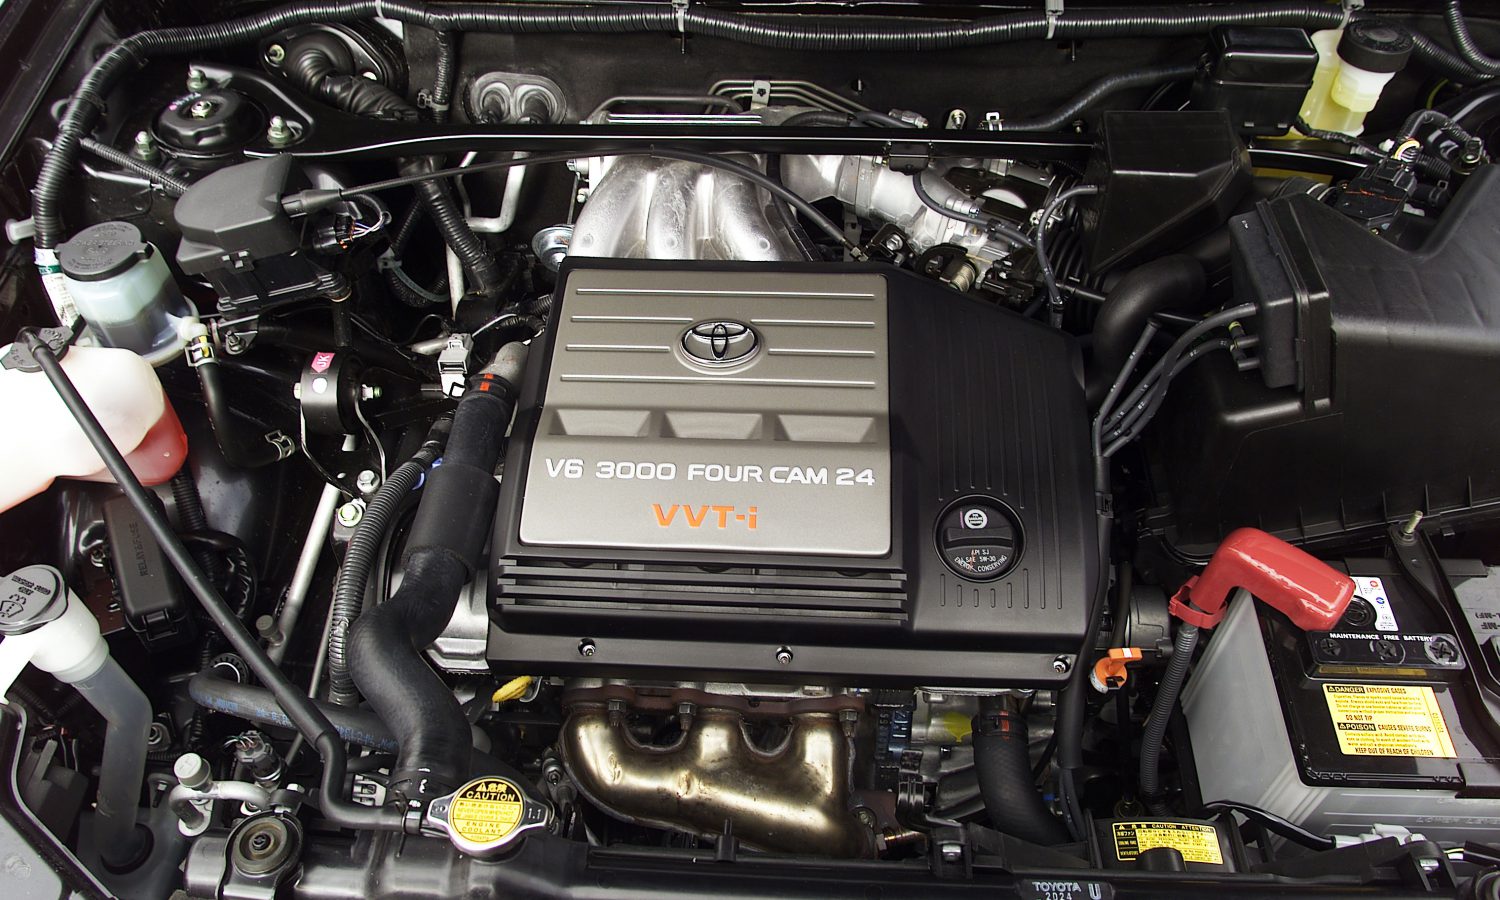 2001-2003 Toyota Highlander engine - Toyota USA Newsroom